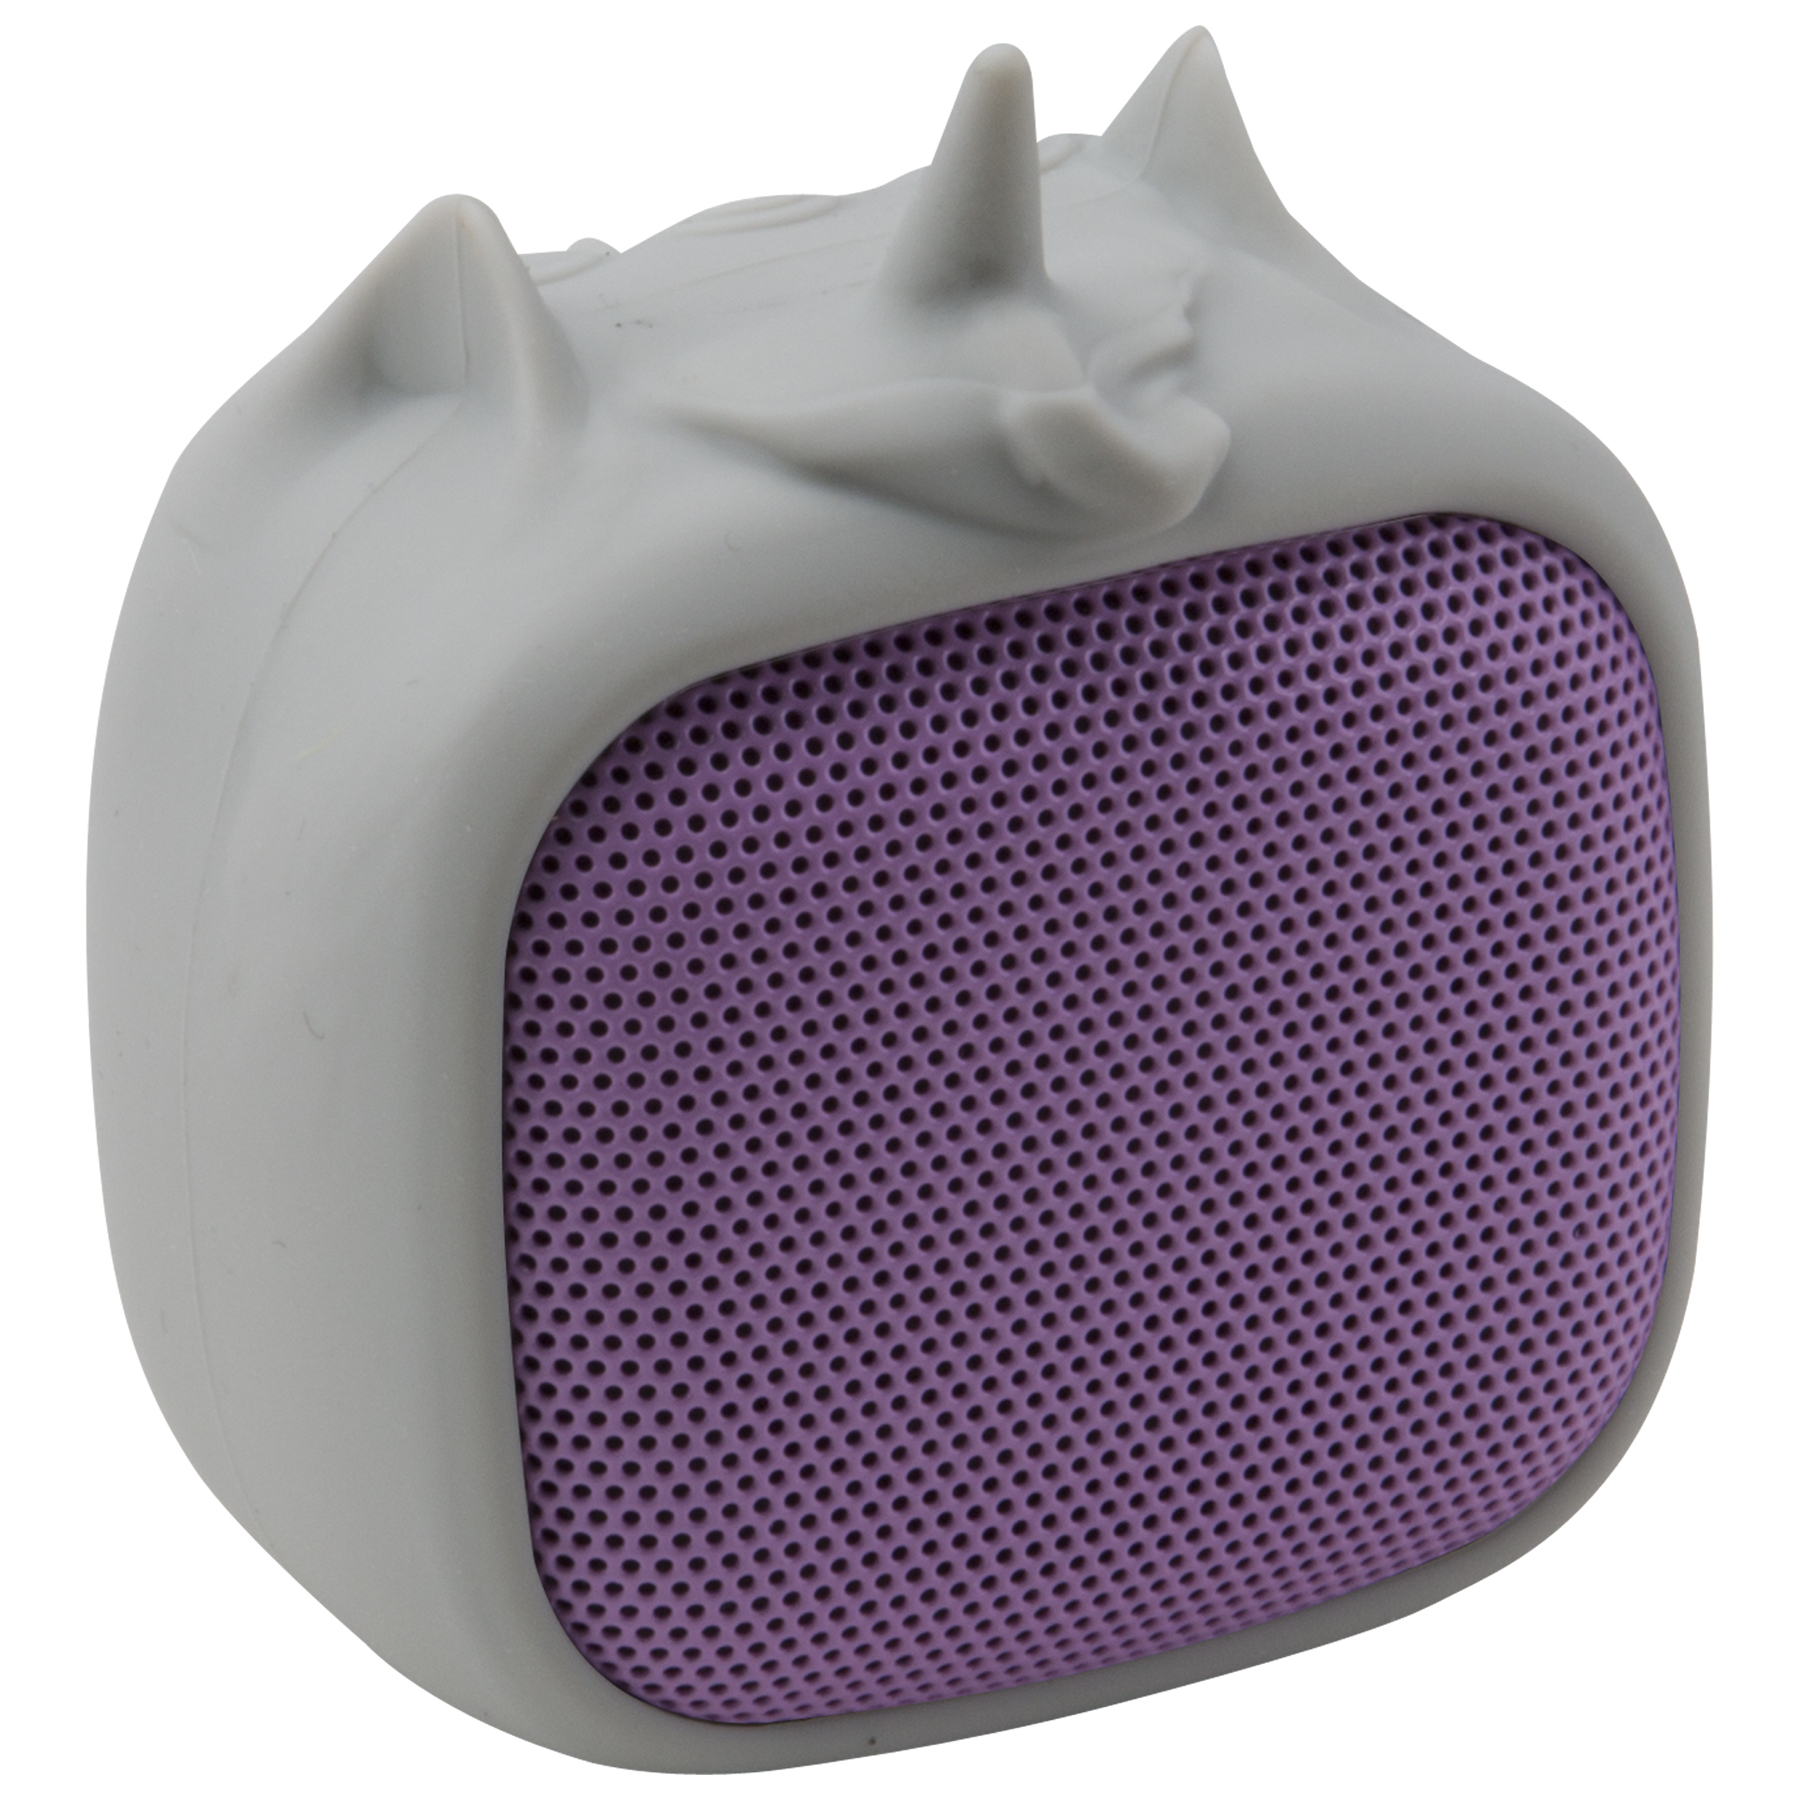 iLive Bluetooth Wild Tailz Unicorn Wireless Speaker, Rechargeable, Grey/Purple, ISB19UNI - image 2 of 5